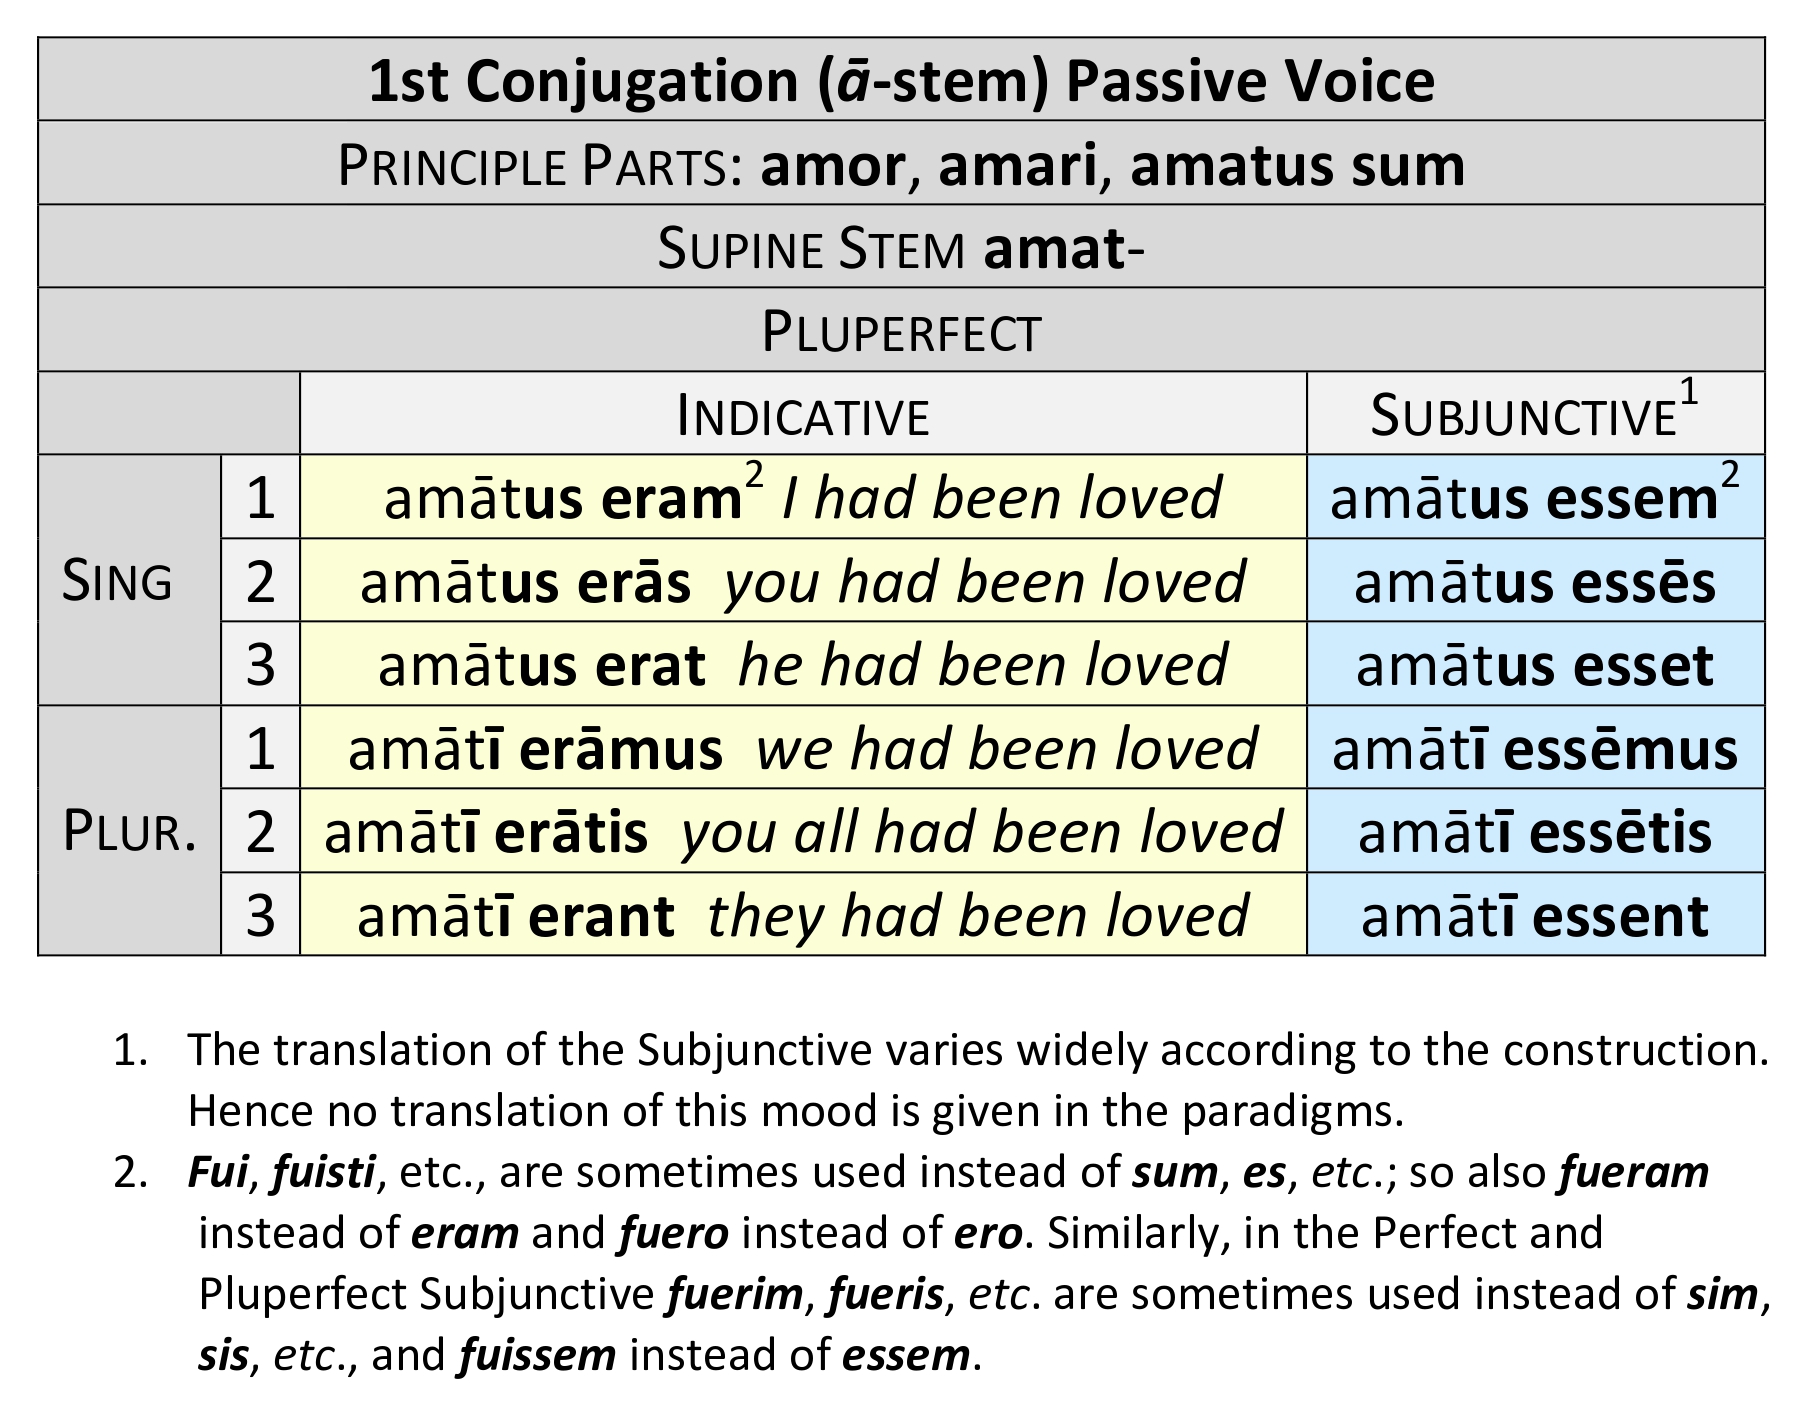 Pluperfect passive conjugation of amō